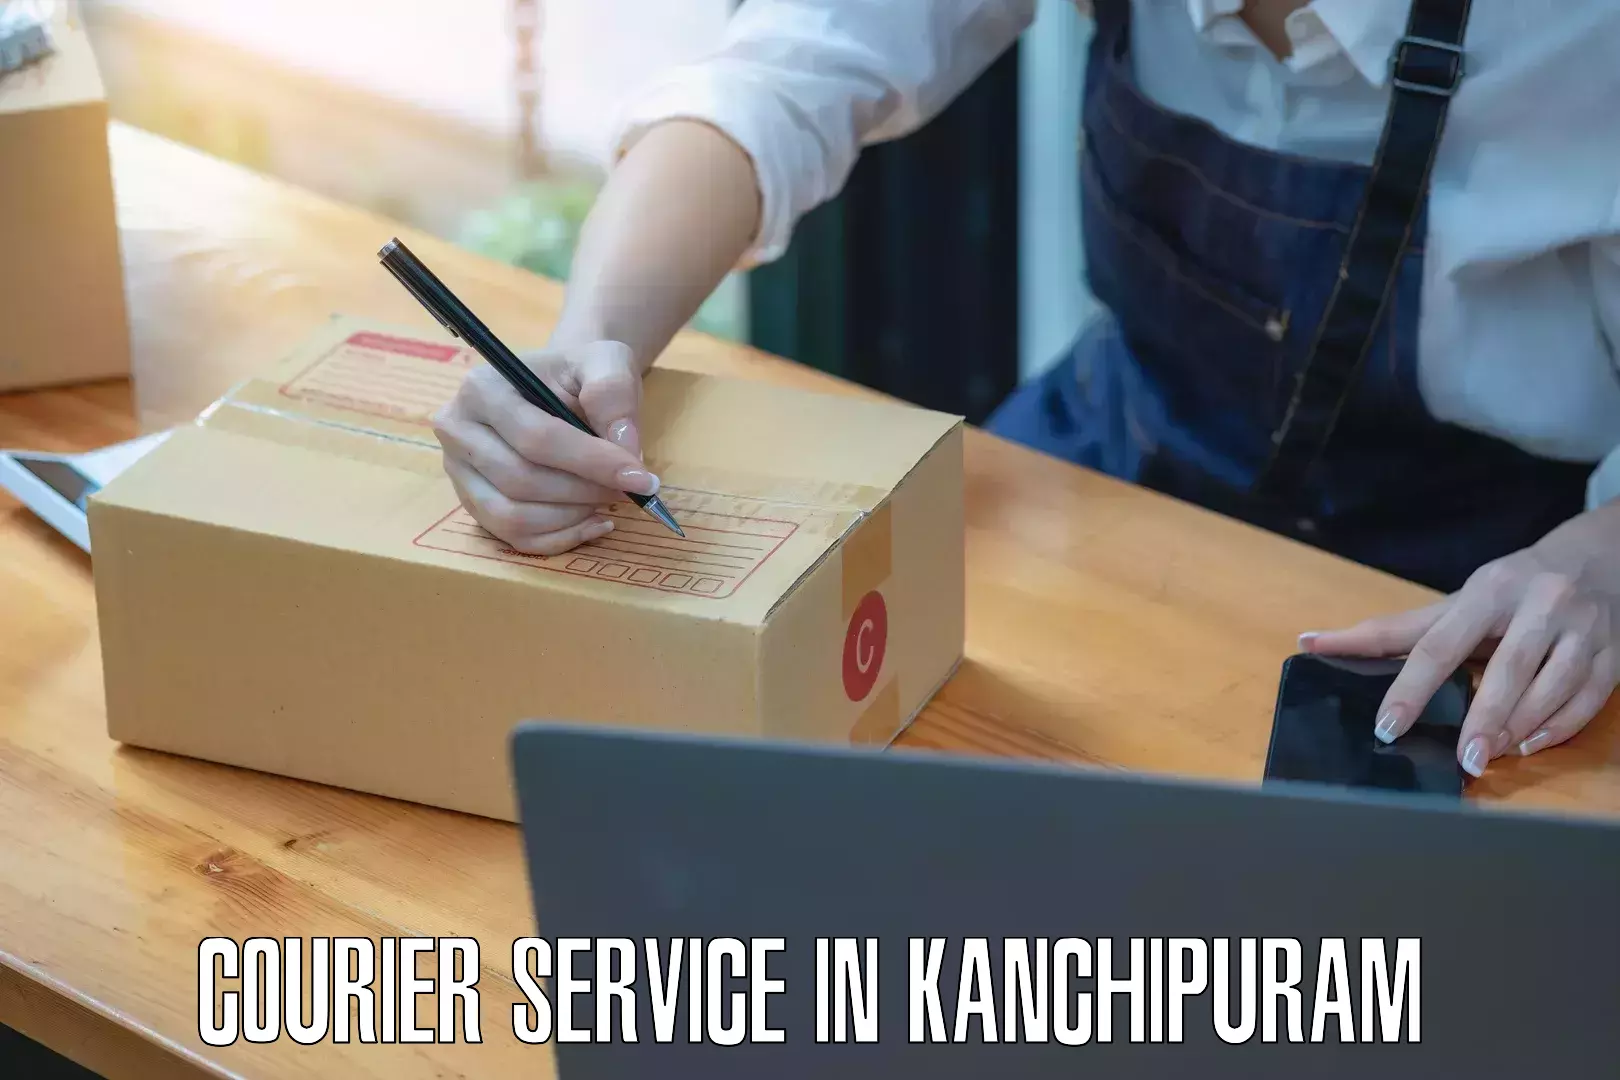 Urgent courier needs in Kanchipuram